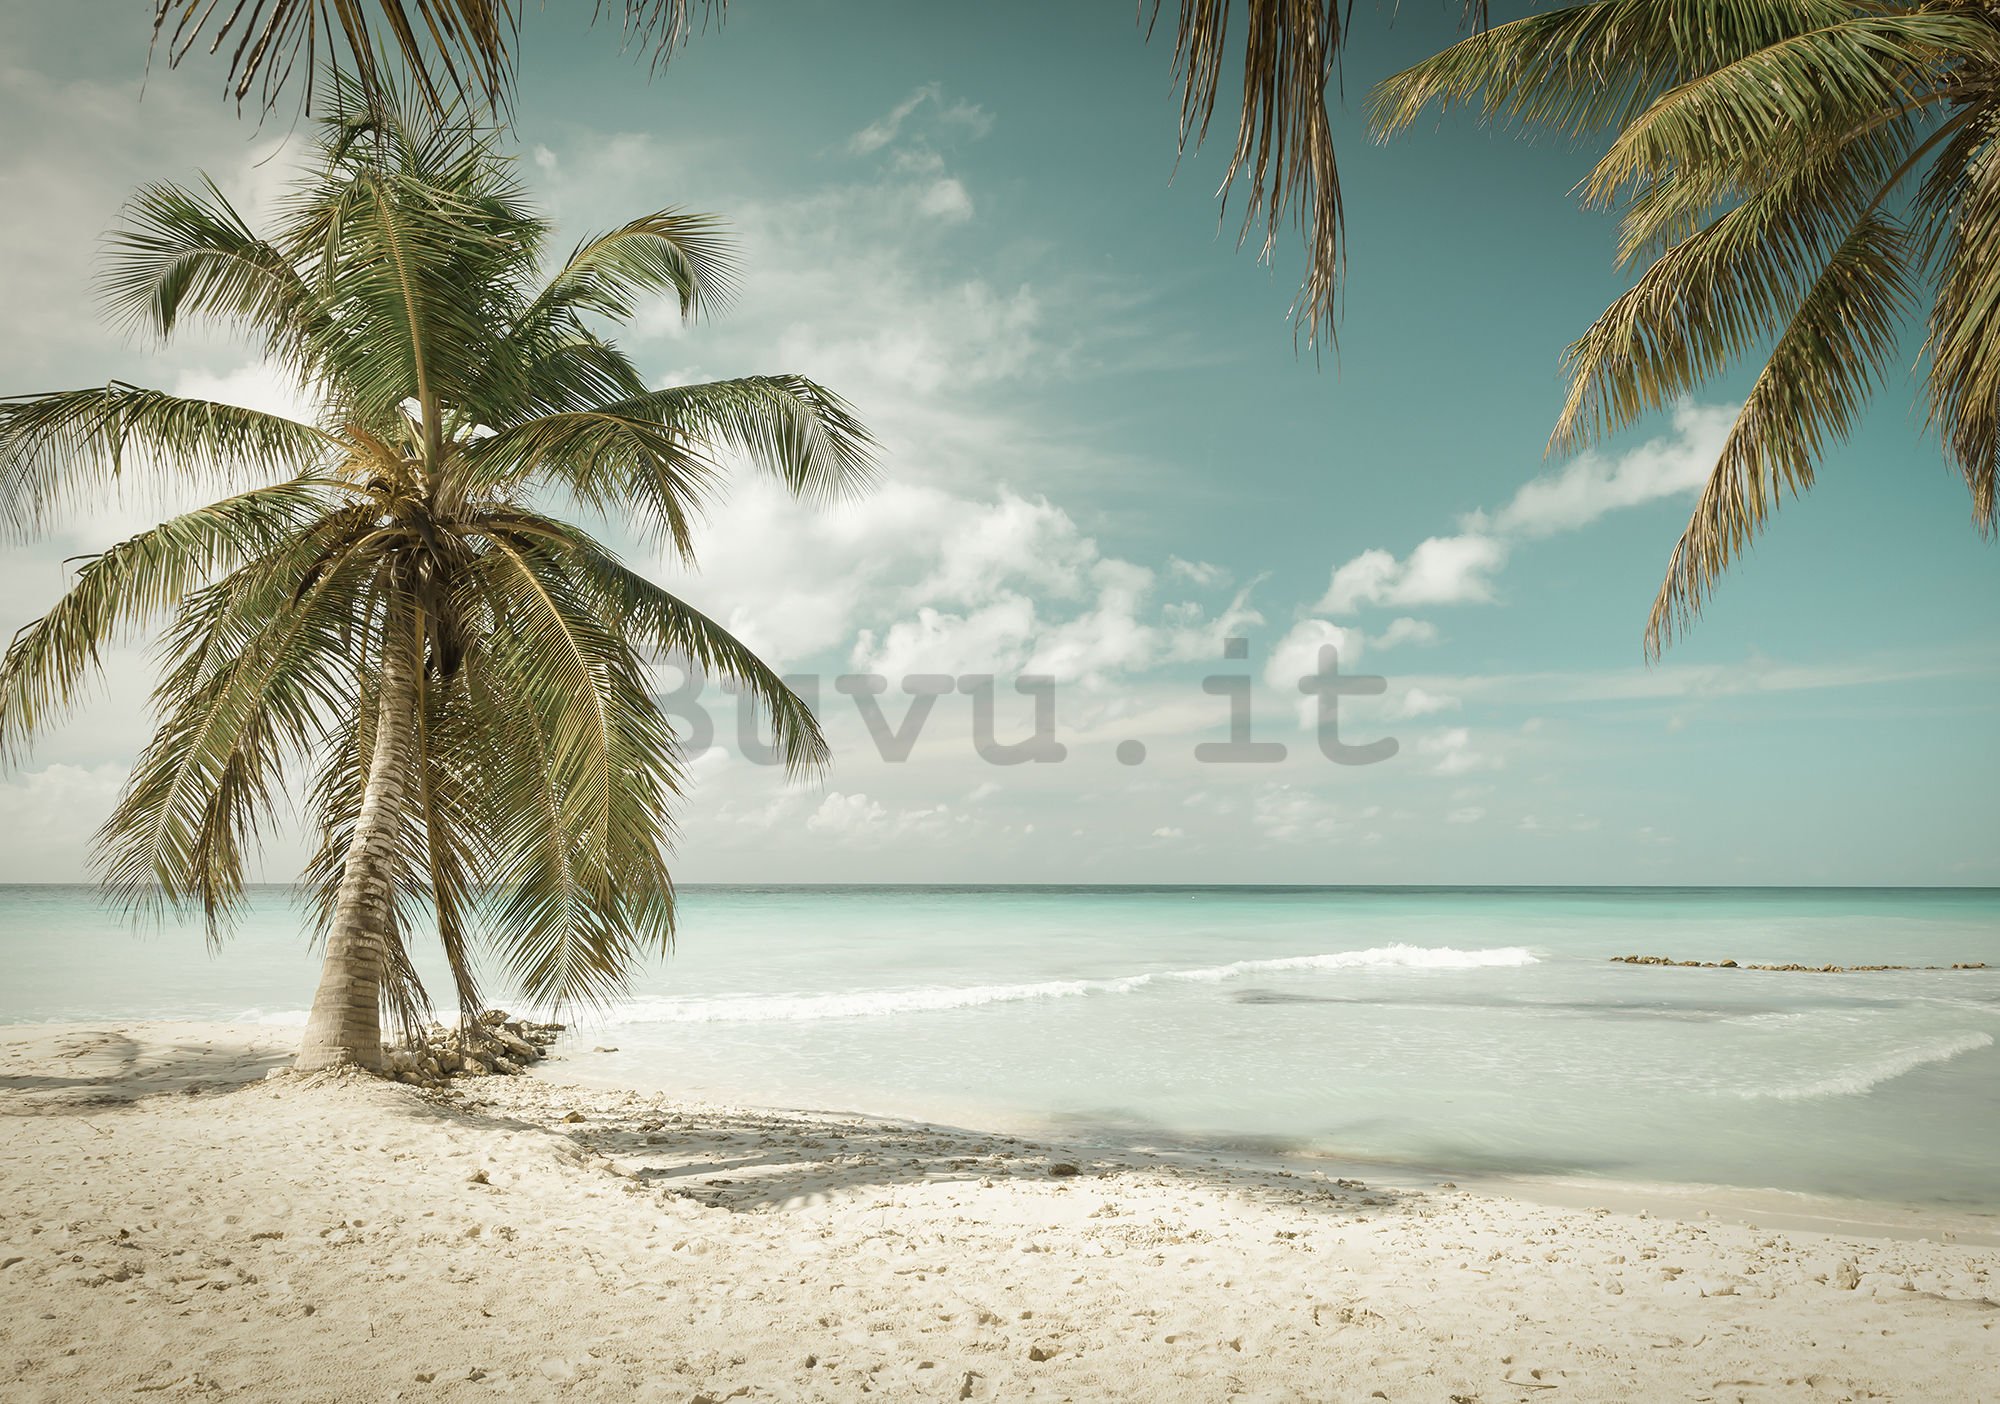 Fotomurale: Le palme sul mare - 184x254 cm